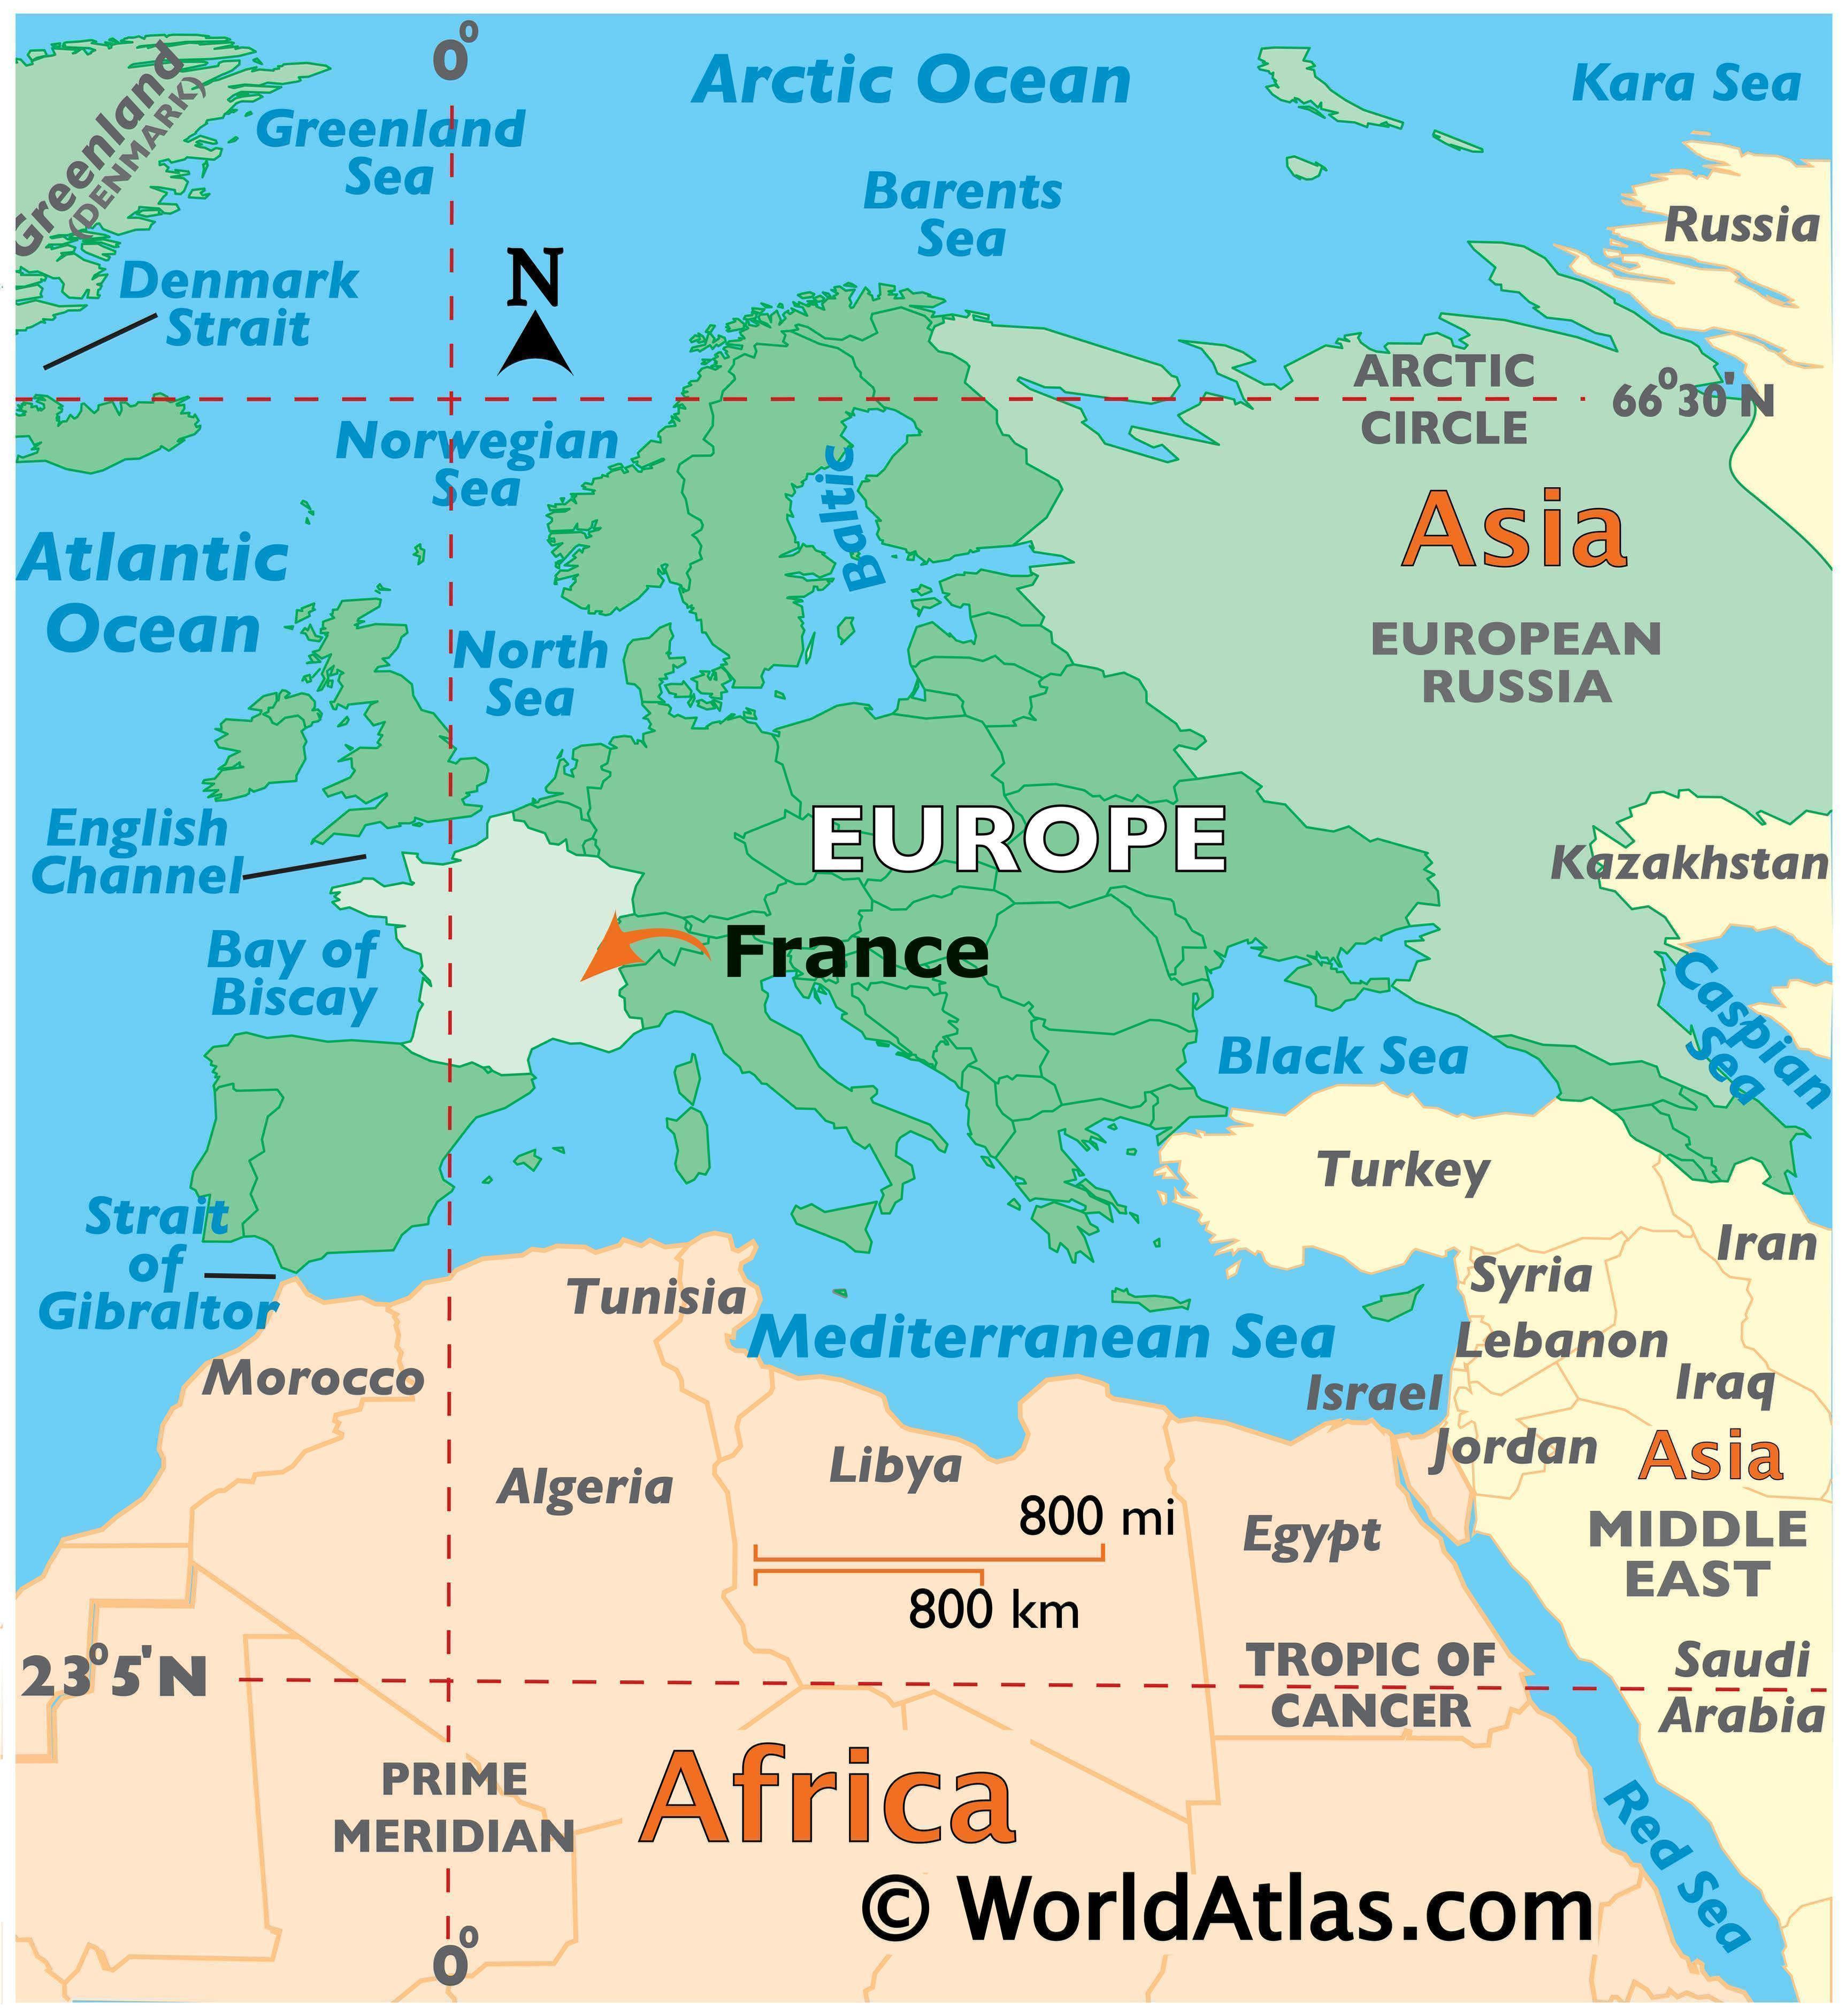  /><br/><p>France On The Map</p></center></div>
<script type='text/javascript'>
var obj0=document.getElementById(